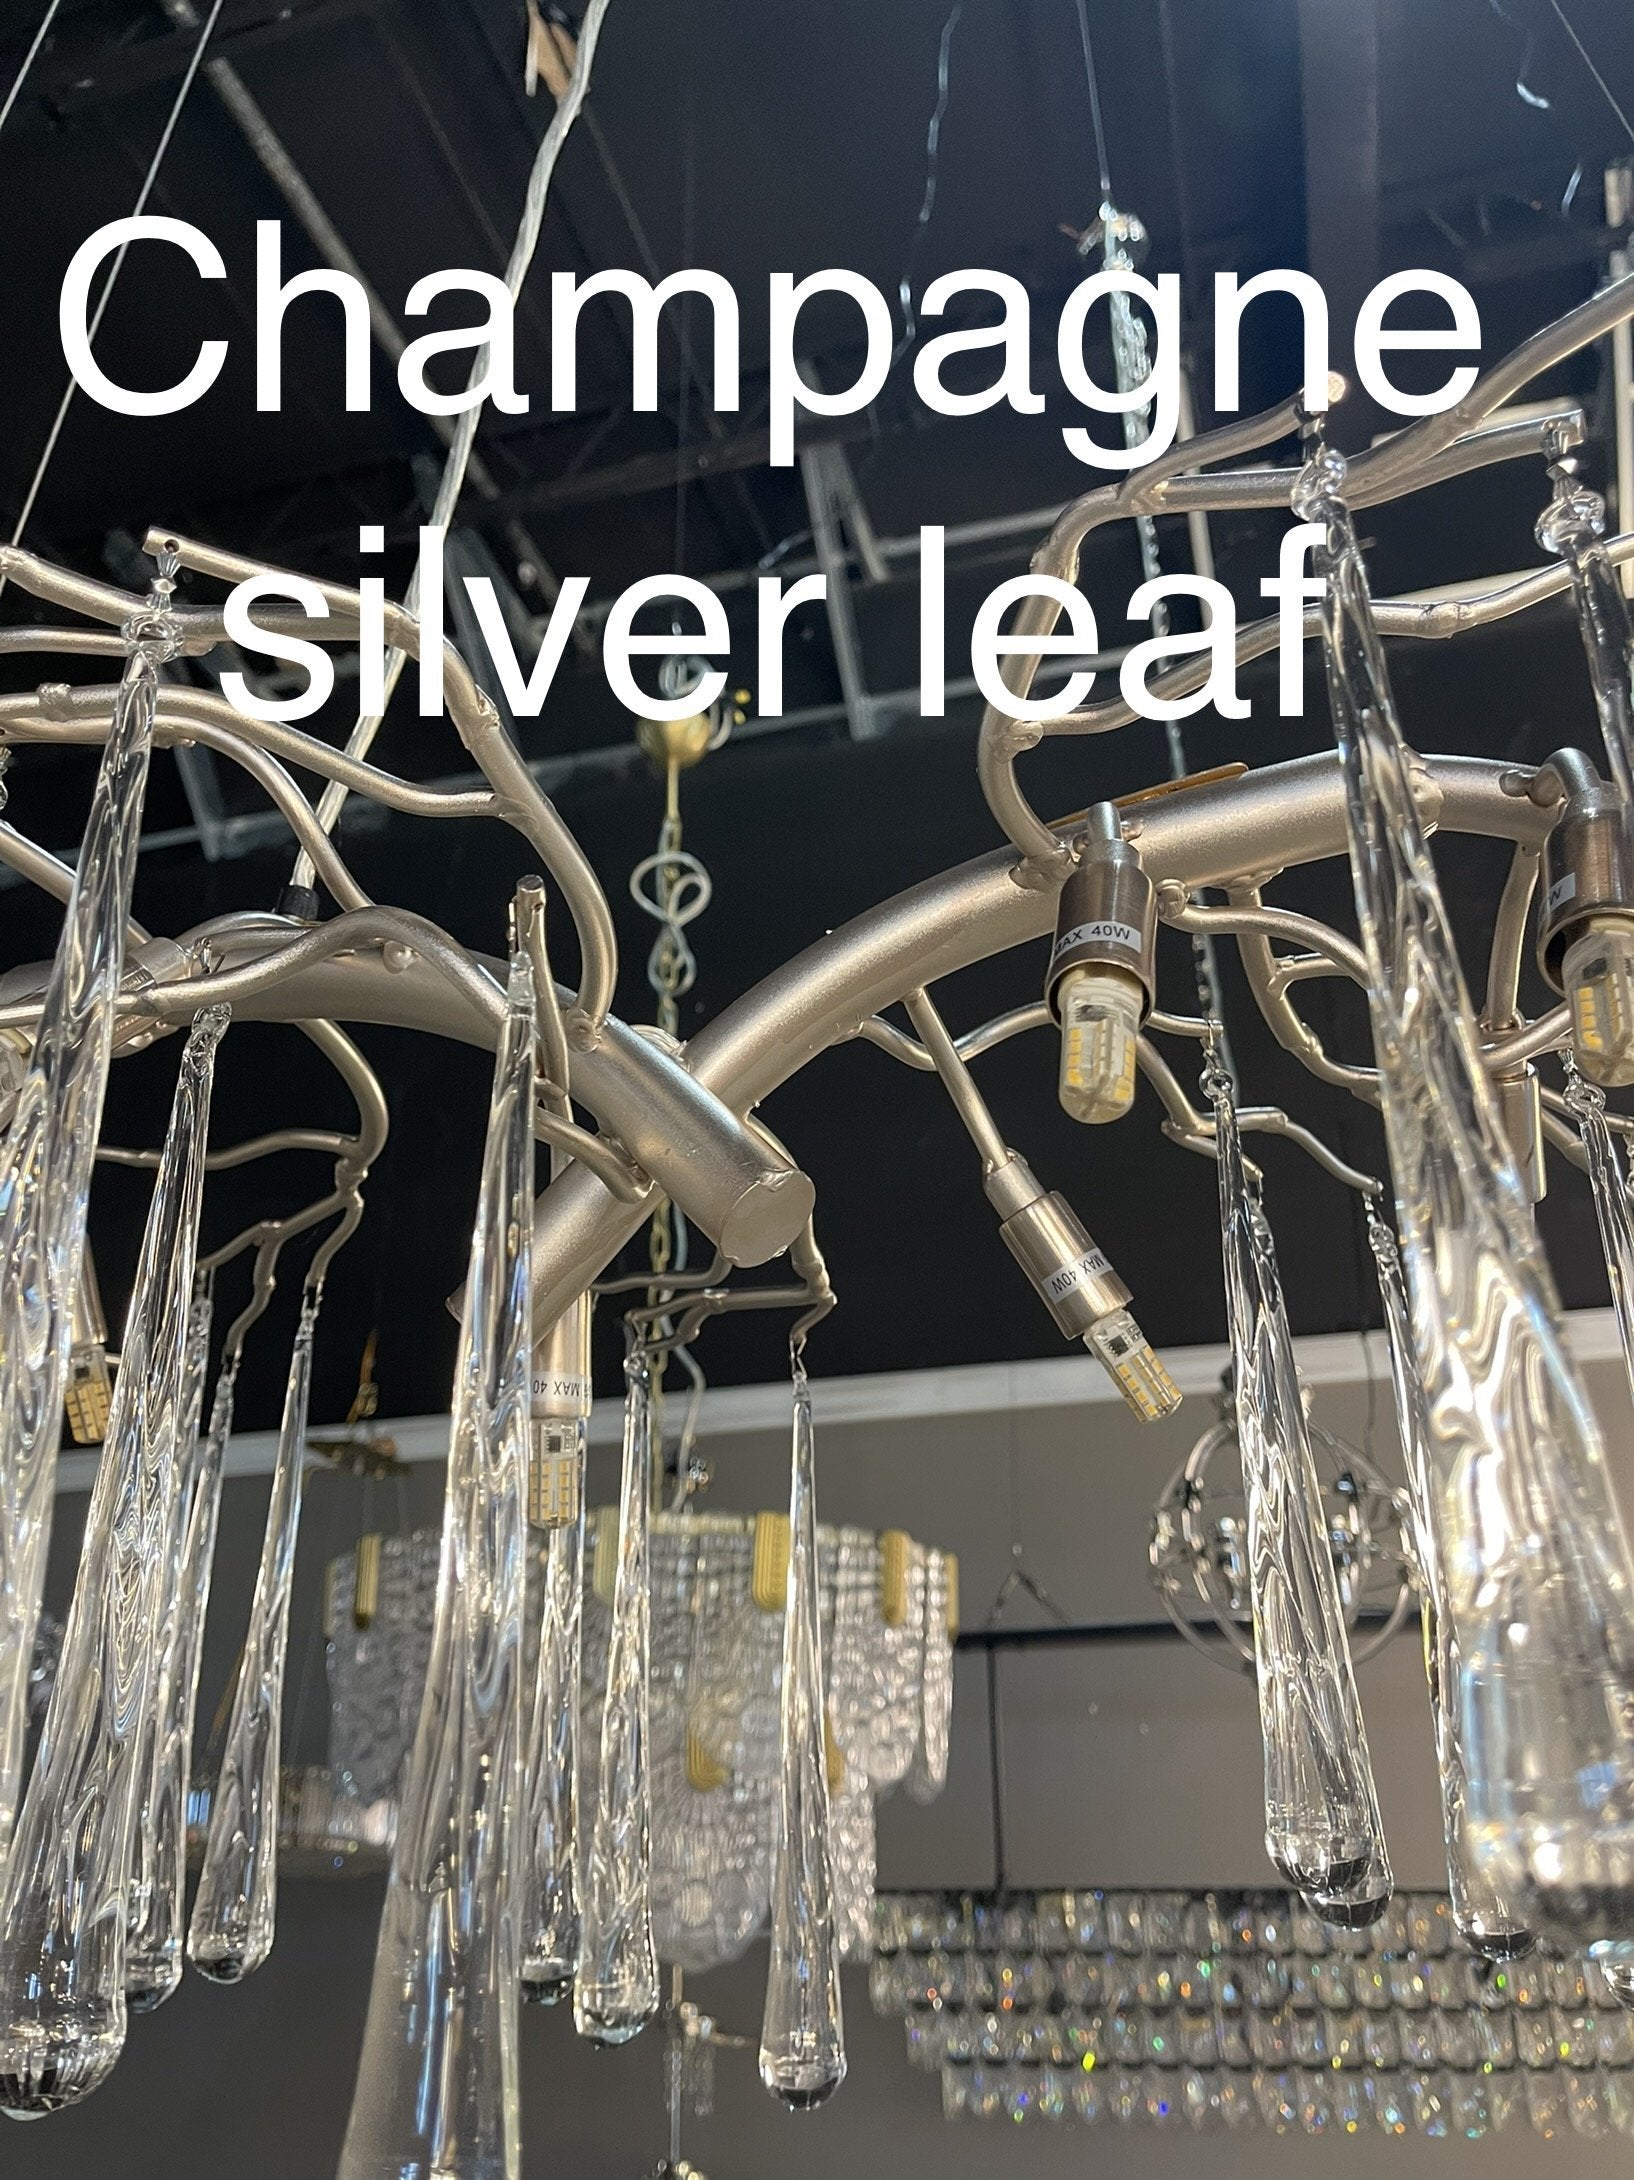 Livio Branching Brass Round Teardrop Chandelier - Italian Concept